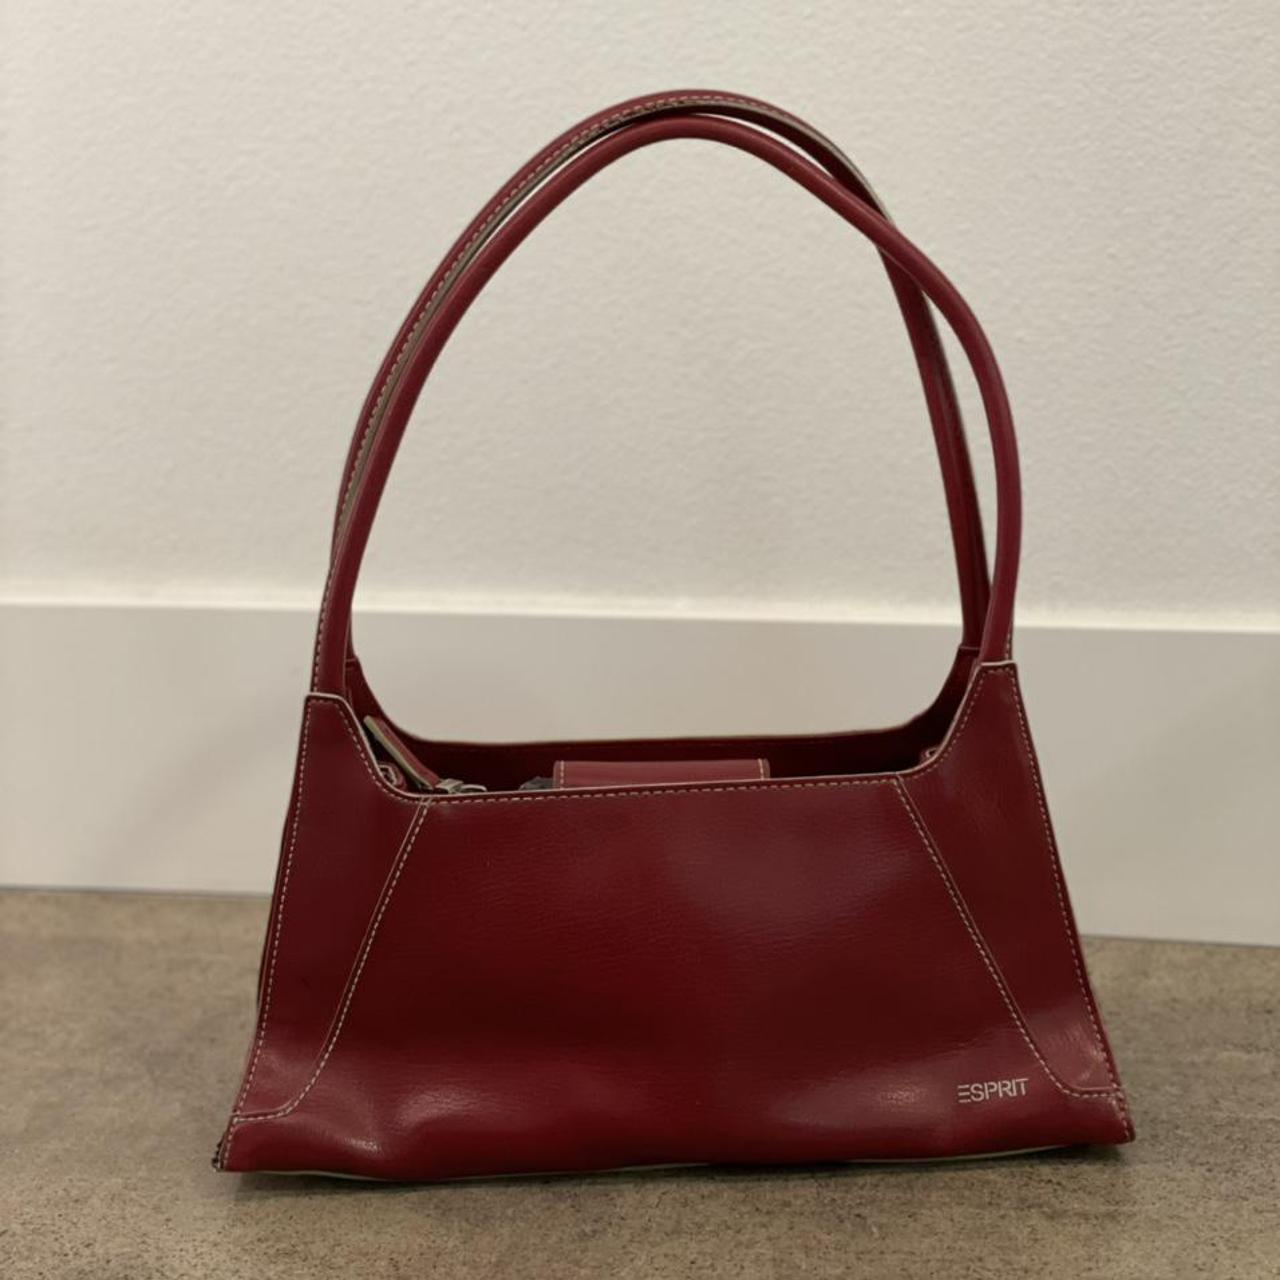 Espirit Women's Red and Burgundy Bag